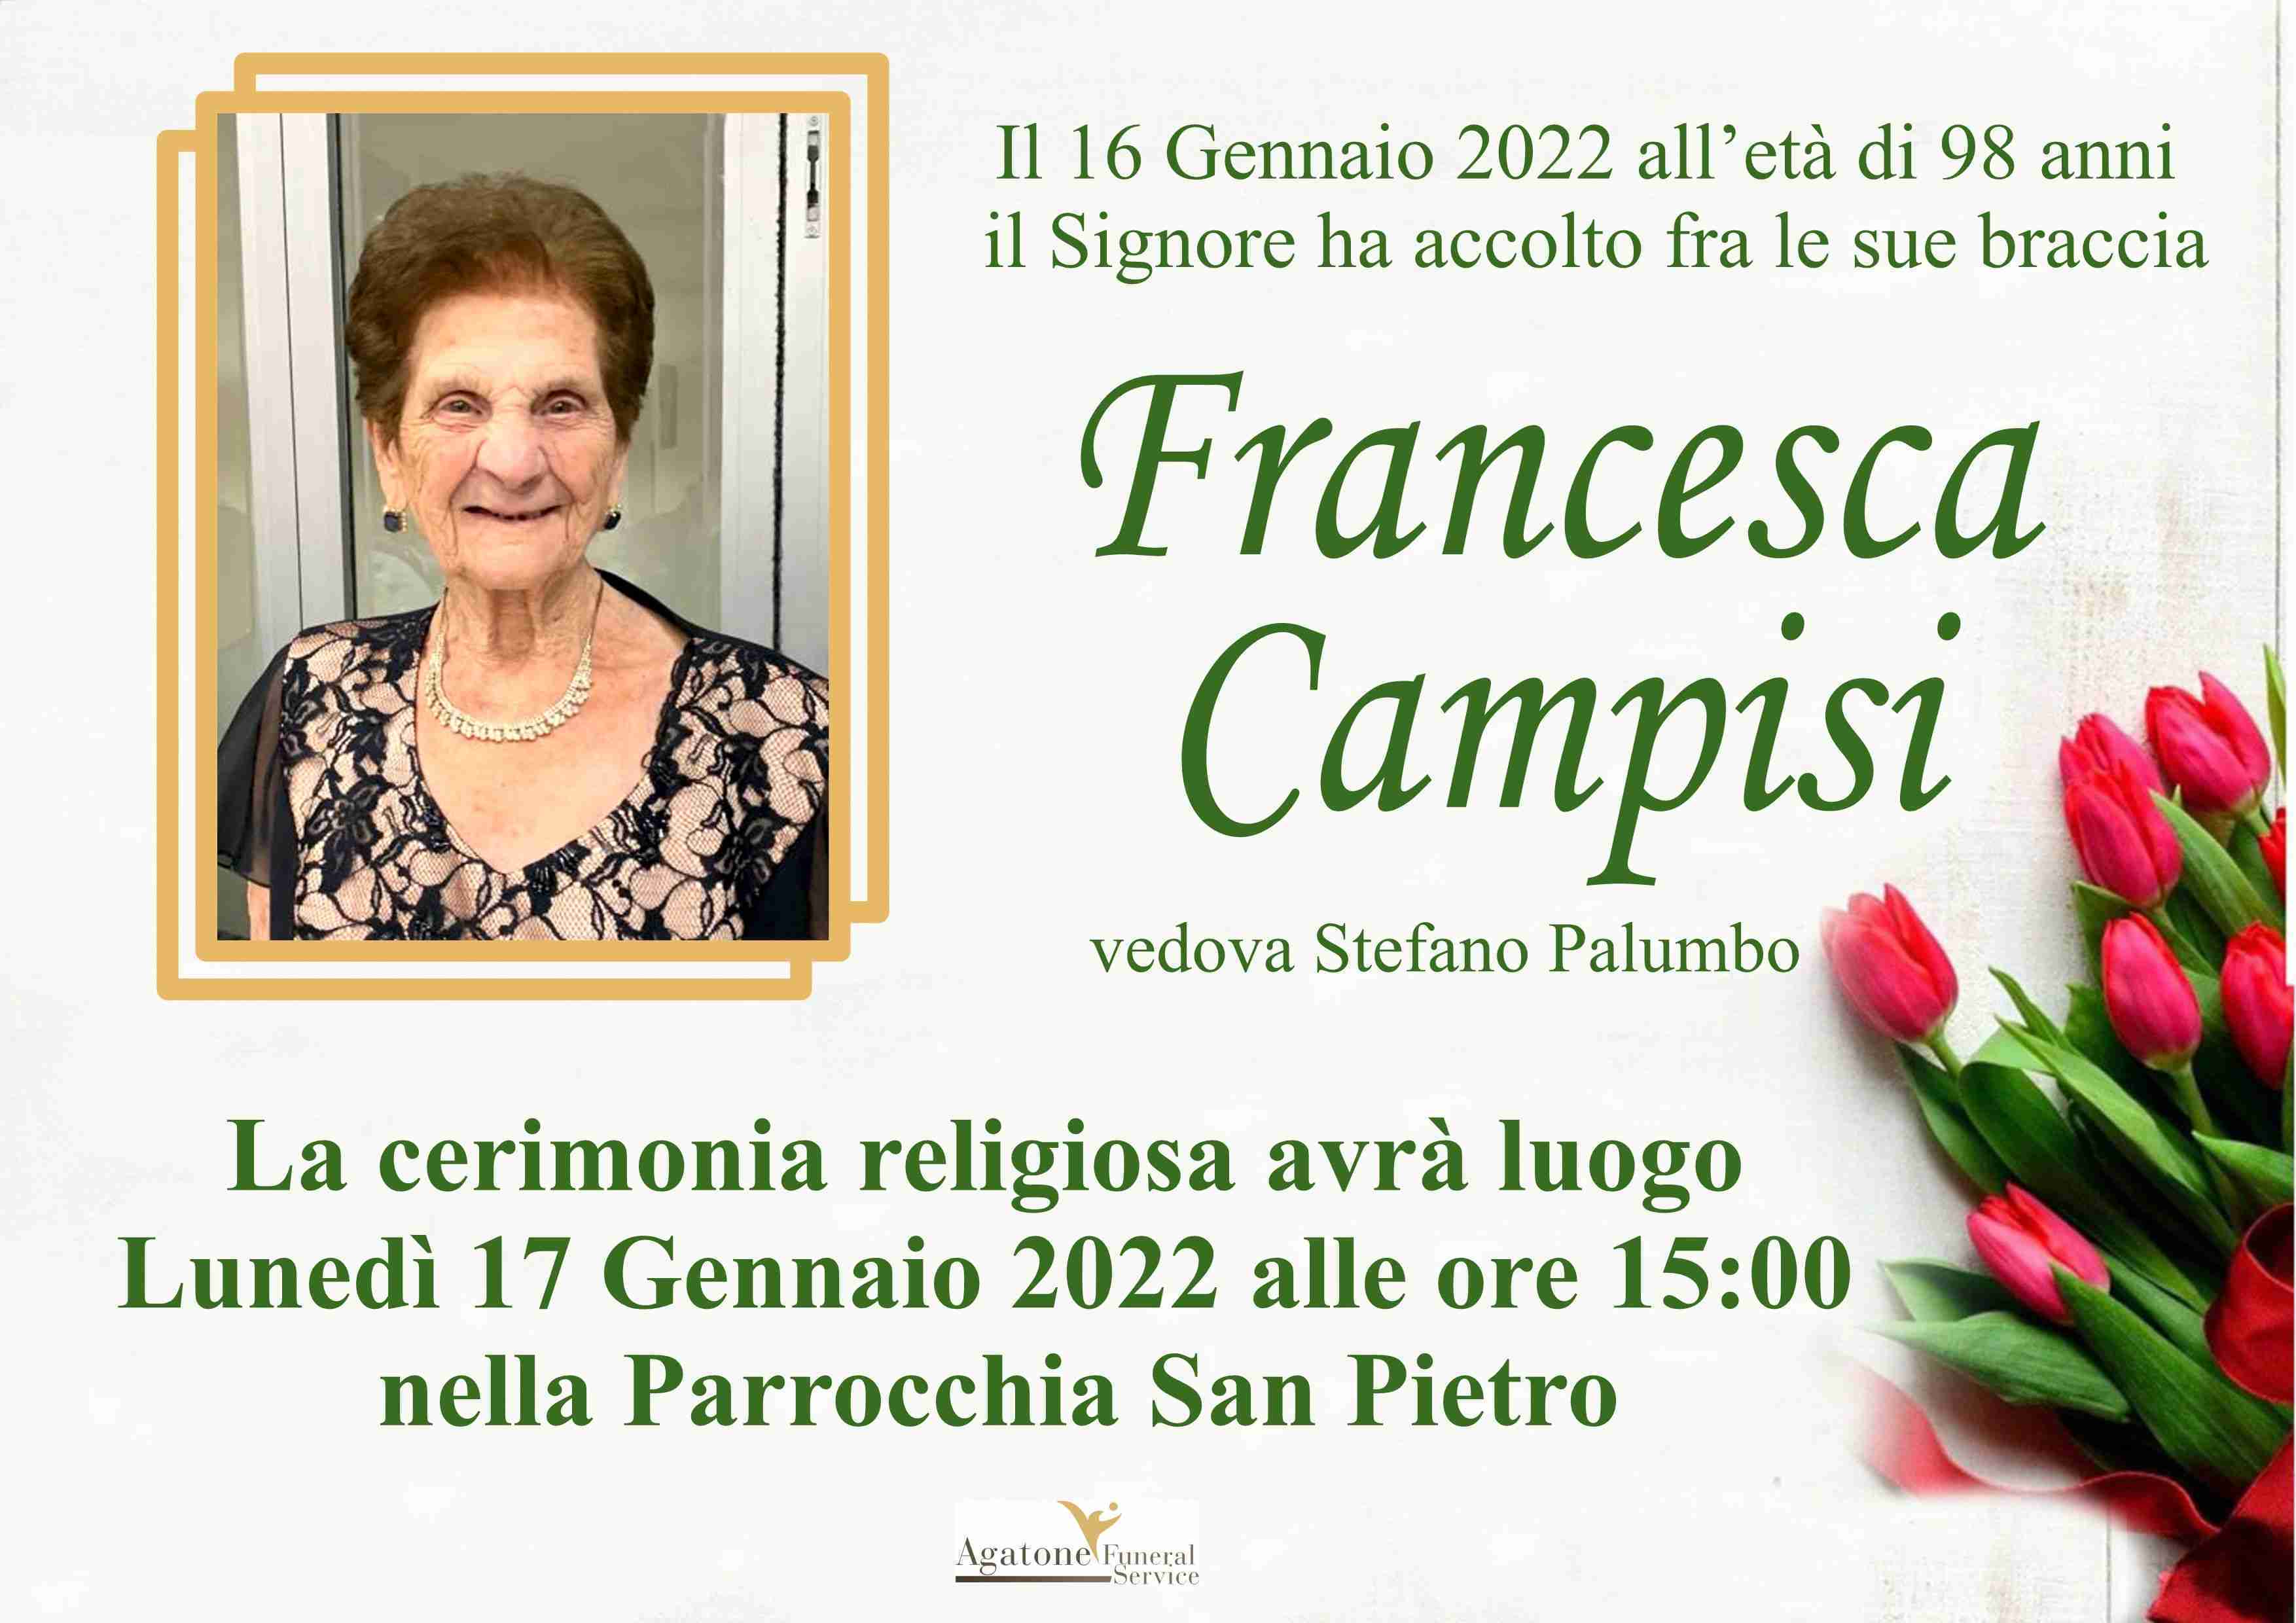 Francesca Campisi